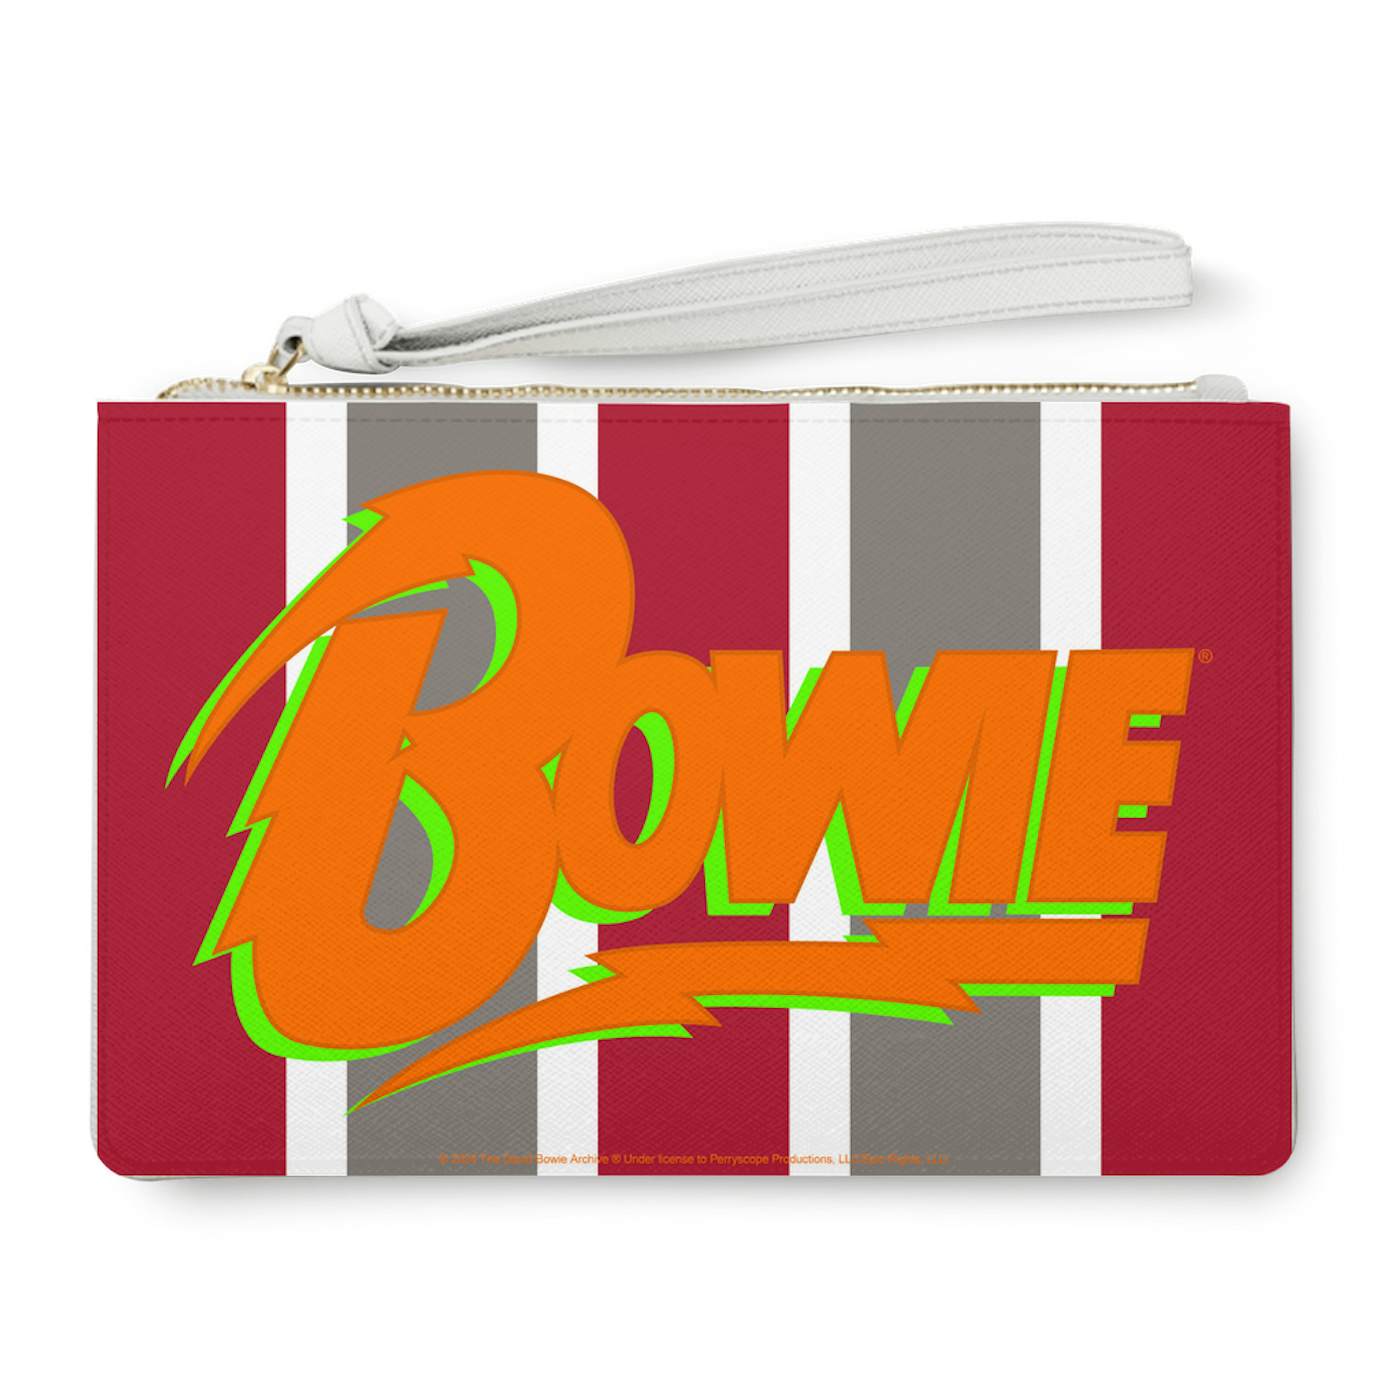 David Bowie Clutch | Multi-Color Stripe 1973 Inspiration (Merchbar Exclusive) David Bowie Clutch Bag